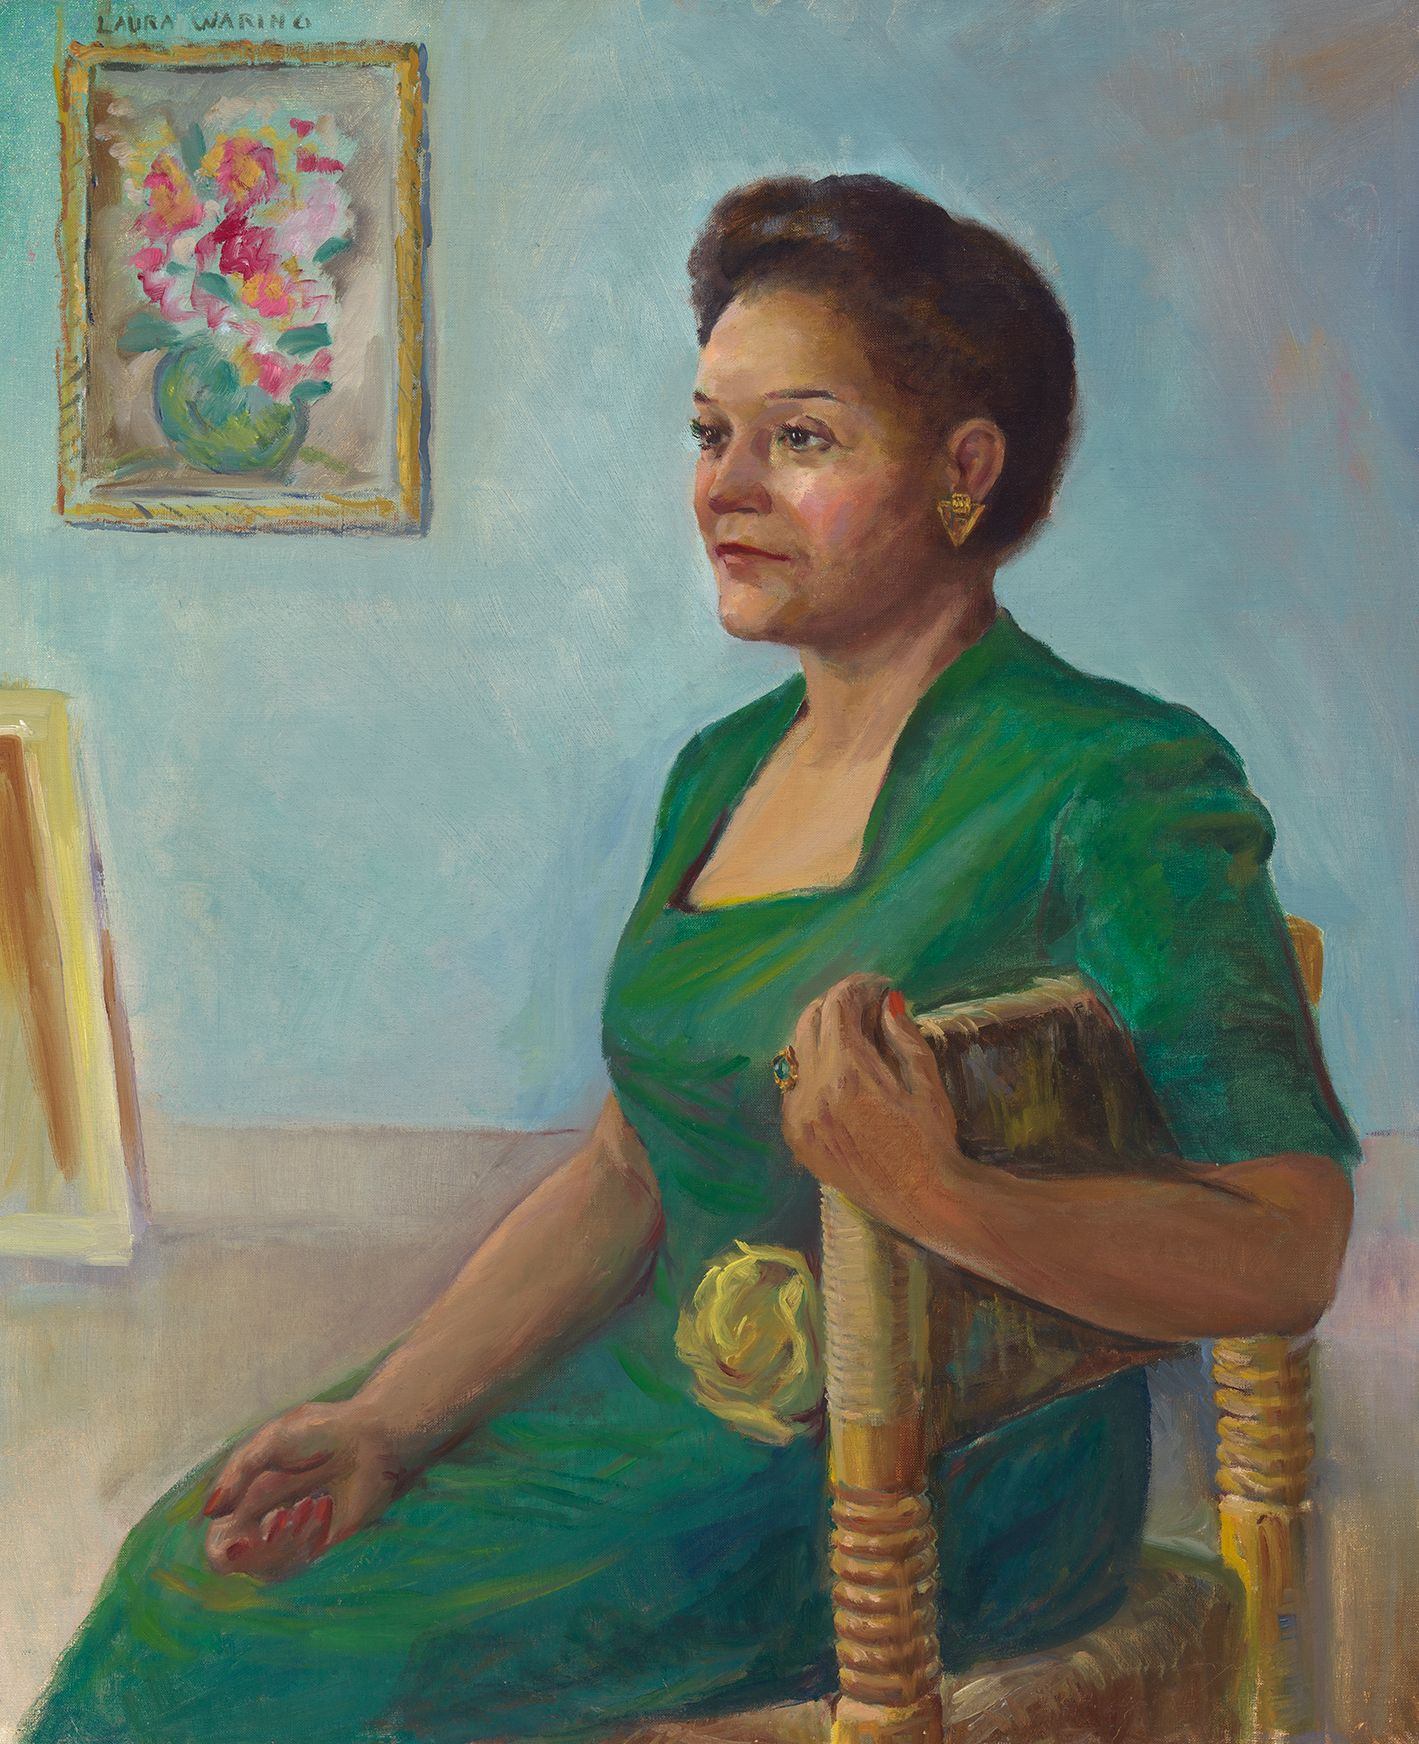 Jessie Redmon Fauset by Laura Wheeler Waring - 1945 - 91.9 × 76.7 cm National Portrait Gallery